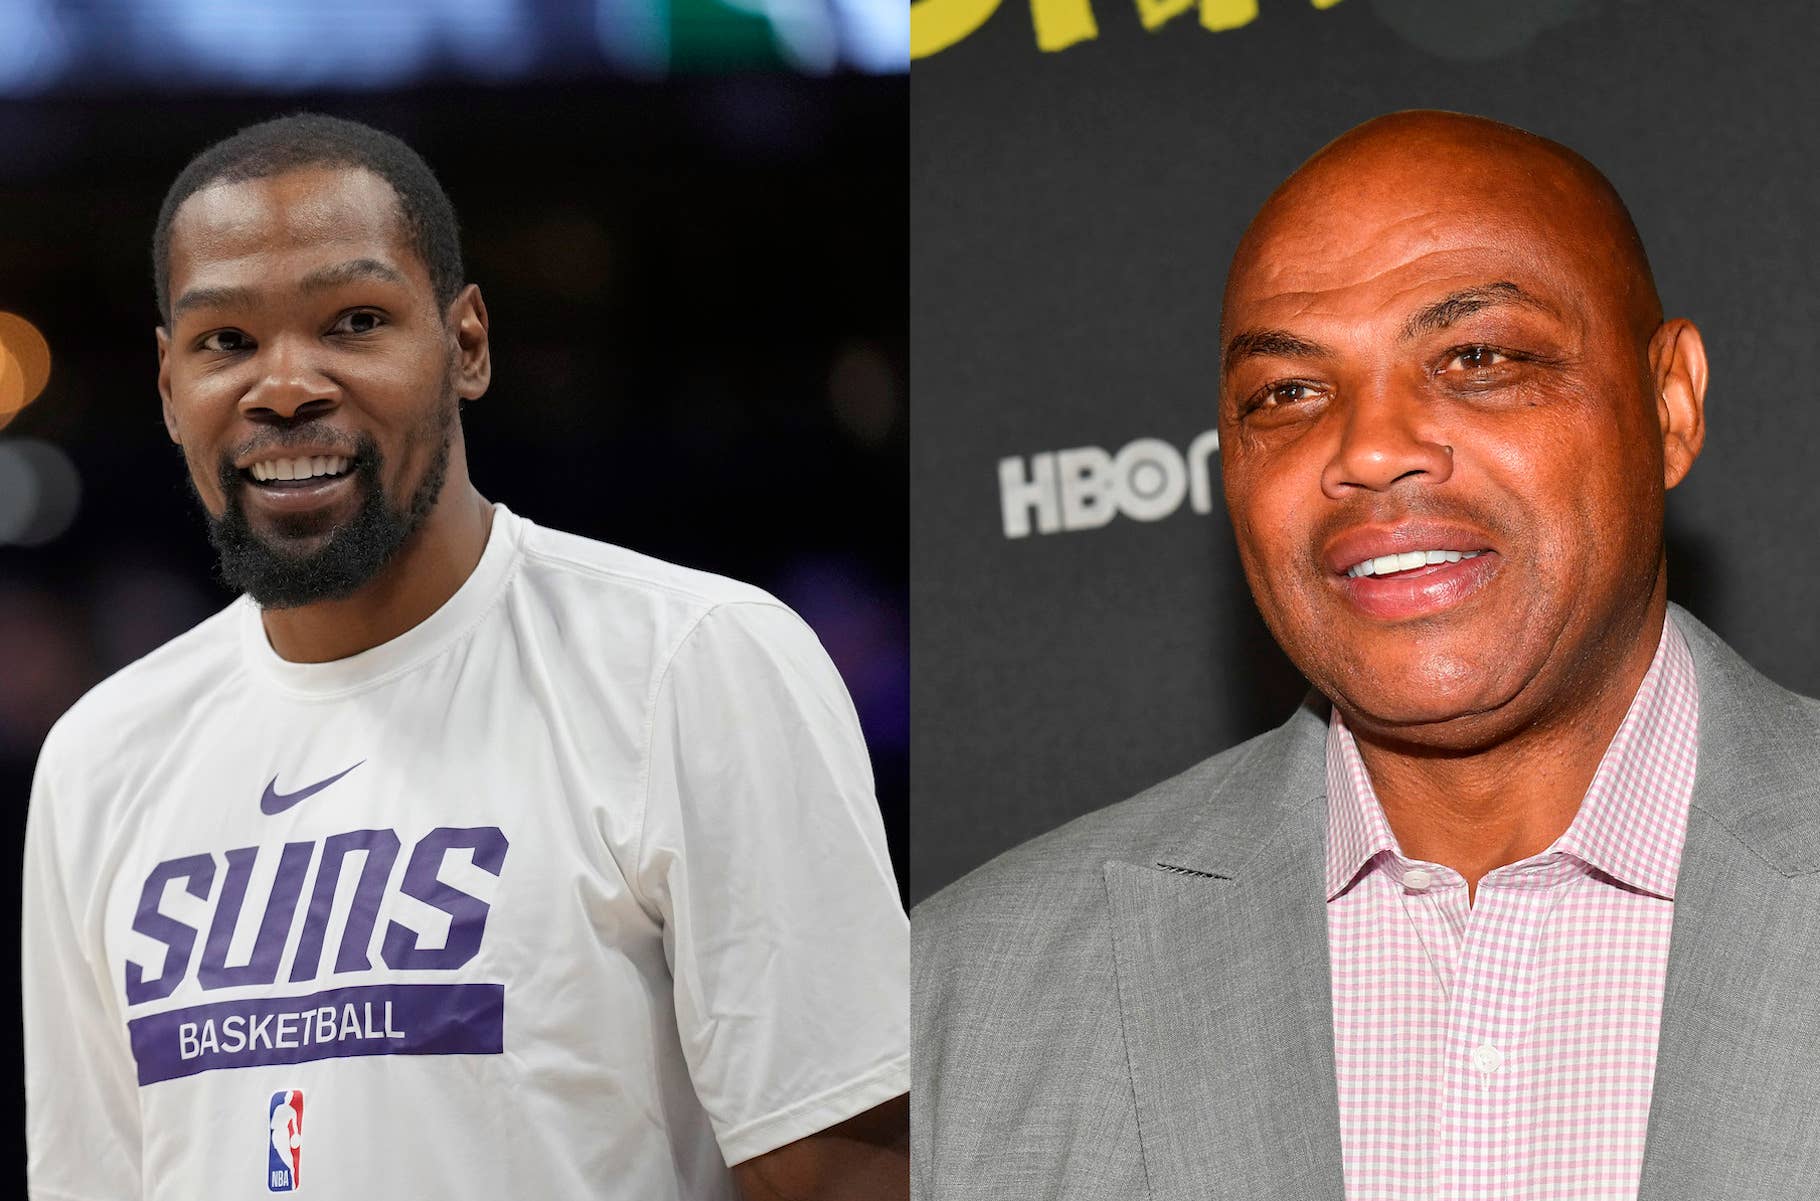 Phoenix Suns forward Kevin Durant and former NBA player Charles Barkley